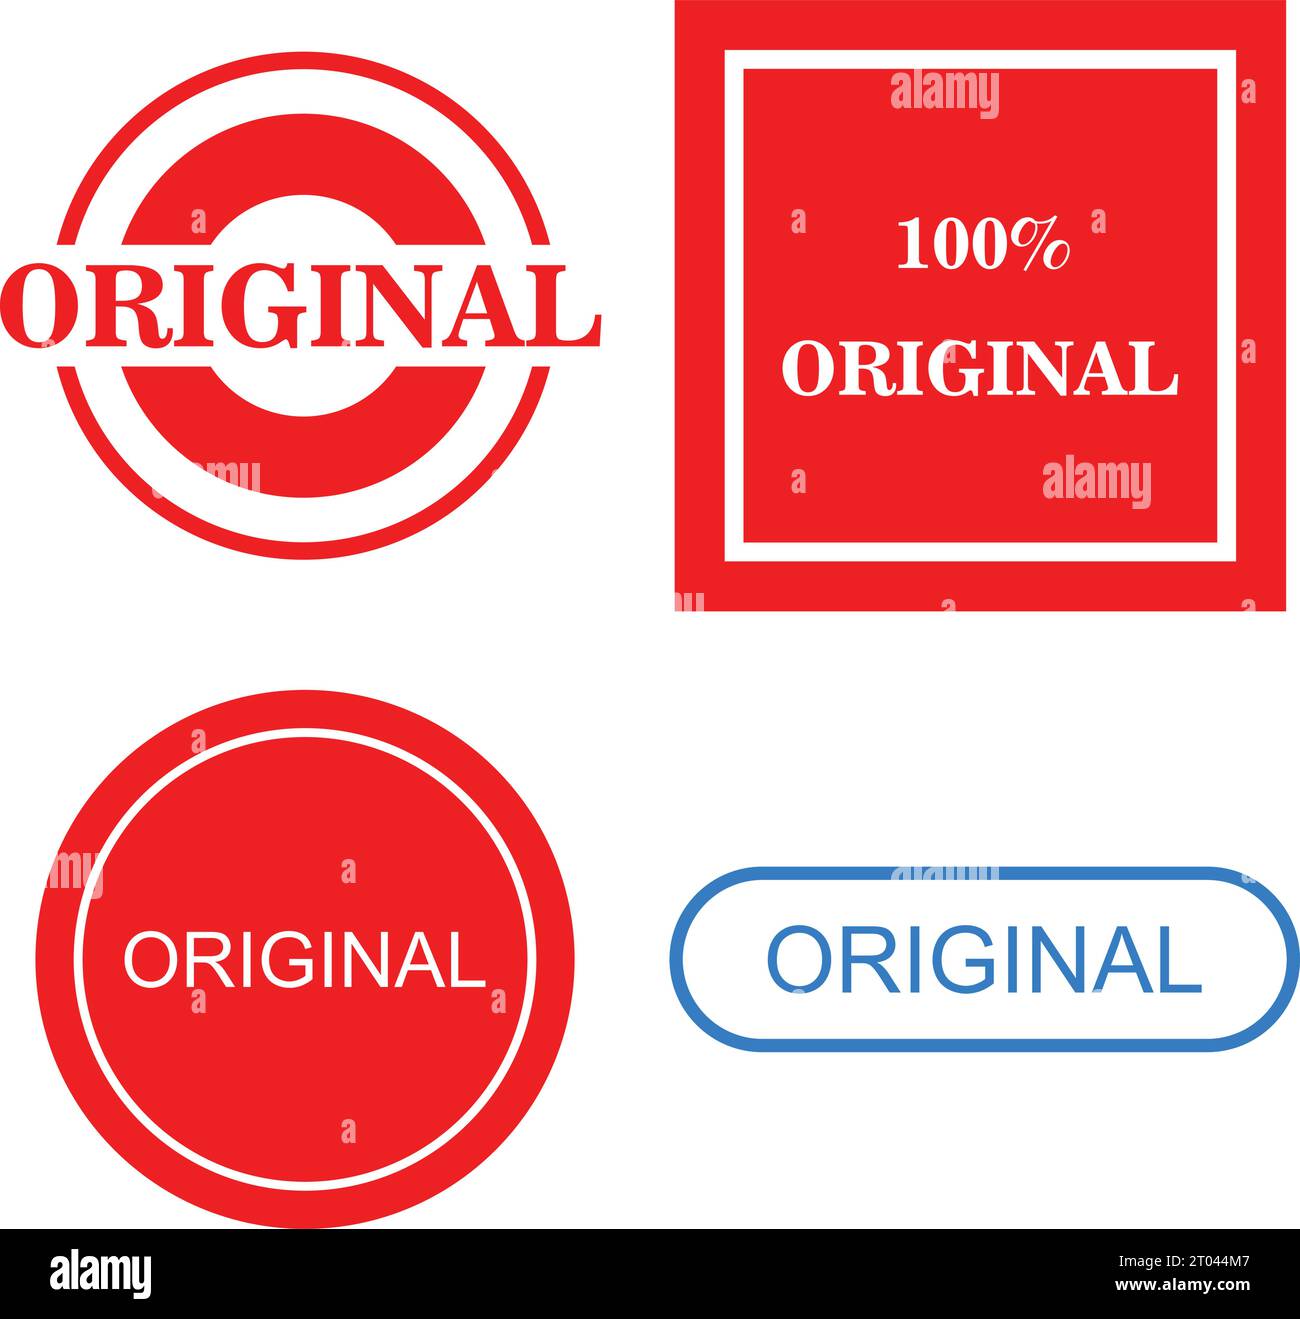 Original stamp. Red original stamp sign icon. Stock Illustration